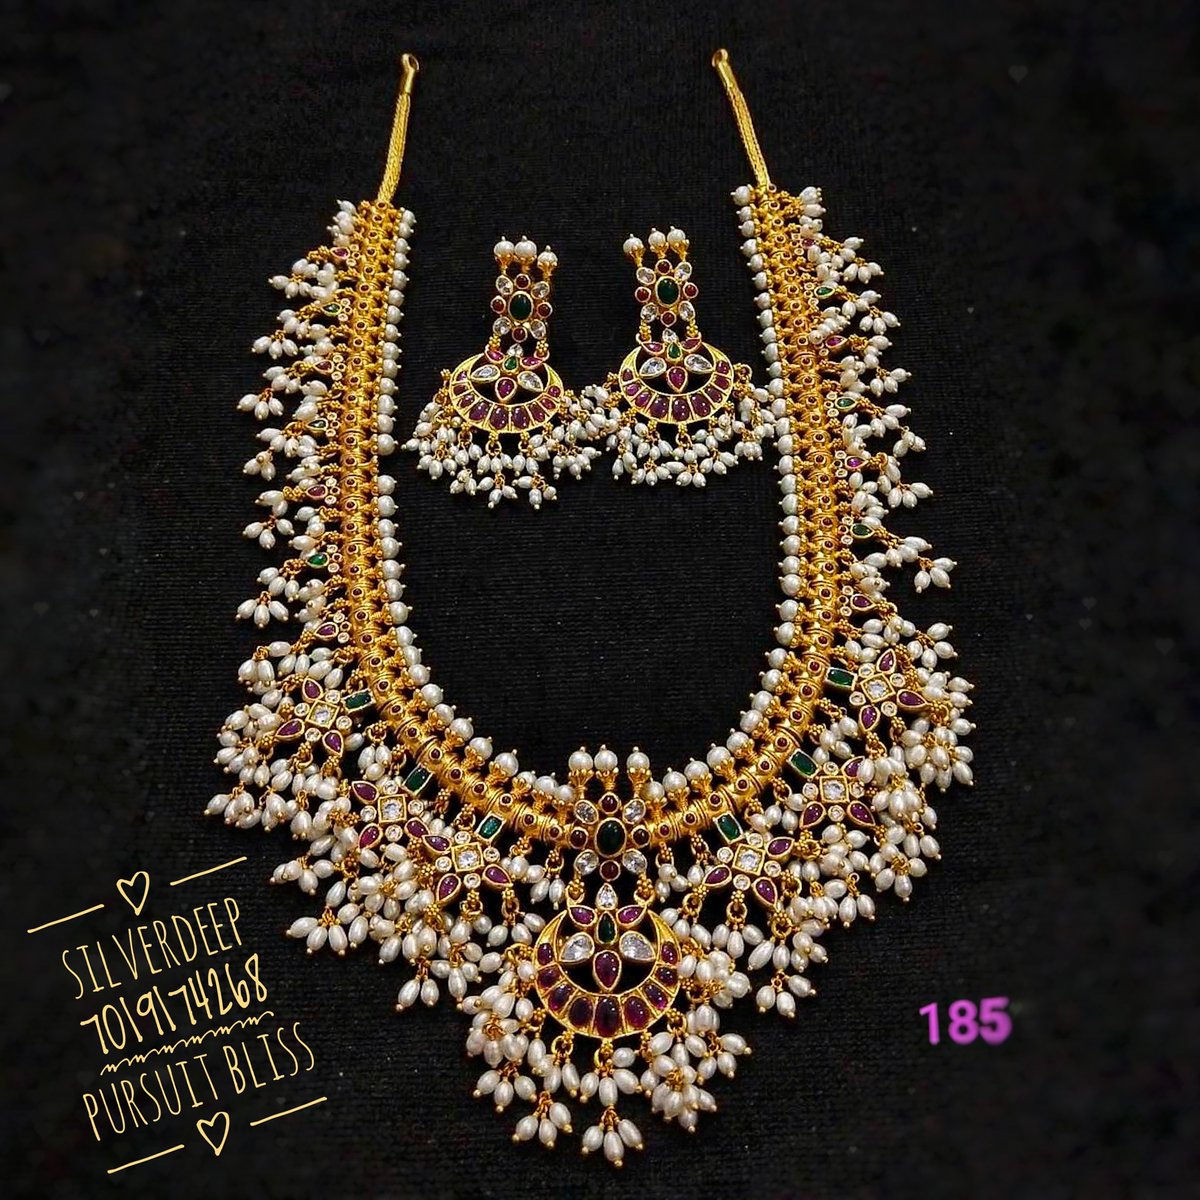 #bejeweled #pearlnecklace #intricatedesign #designerjewellery 
#neckchain #necklace #kundannecklace #kundanneckchain #whitestonejewellery #redstonenecklace #specialoccasion

#goldplatedsilverjewelry
#jewelrydesign #antique925silver
#silverjewelry #925antiquesilver

#SILVERDEEP